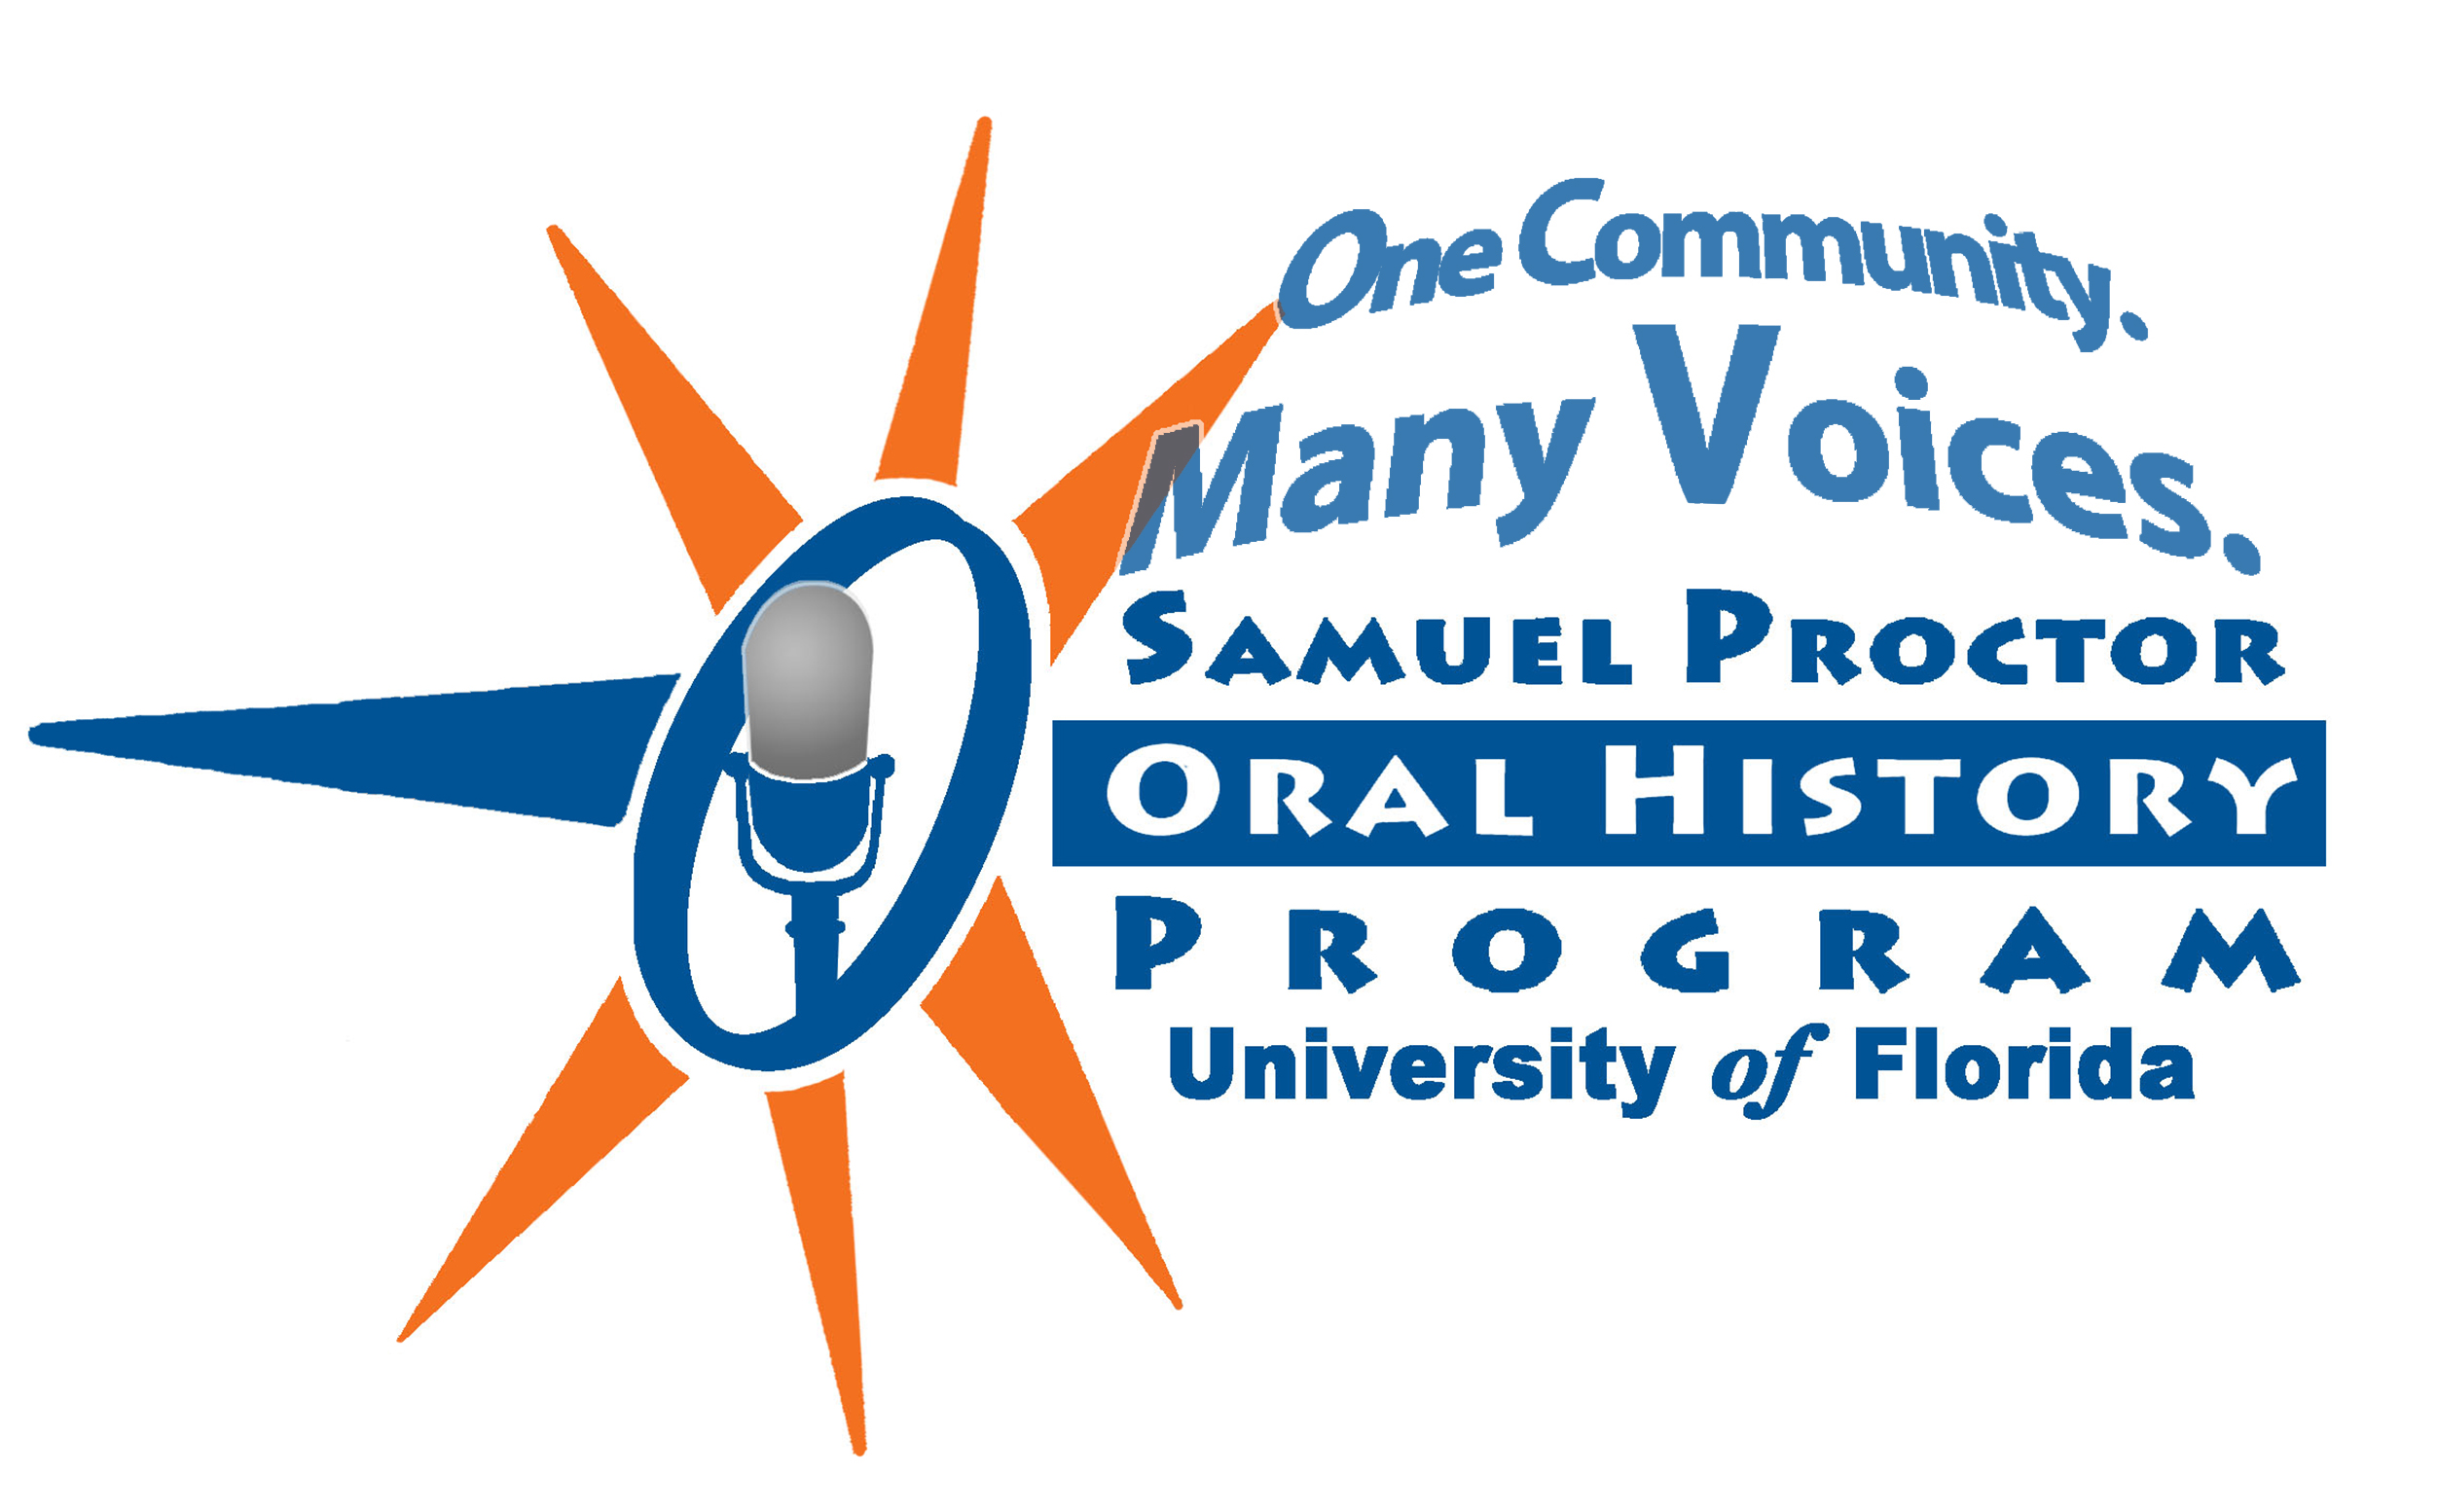 Samuel Proctor Oral History Program Logo